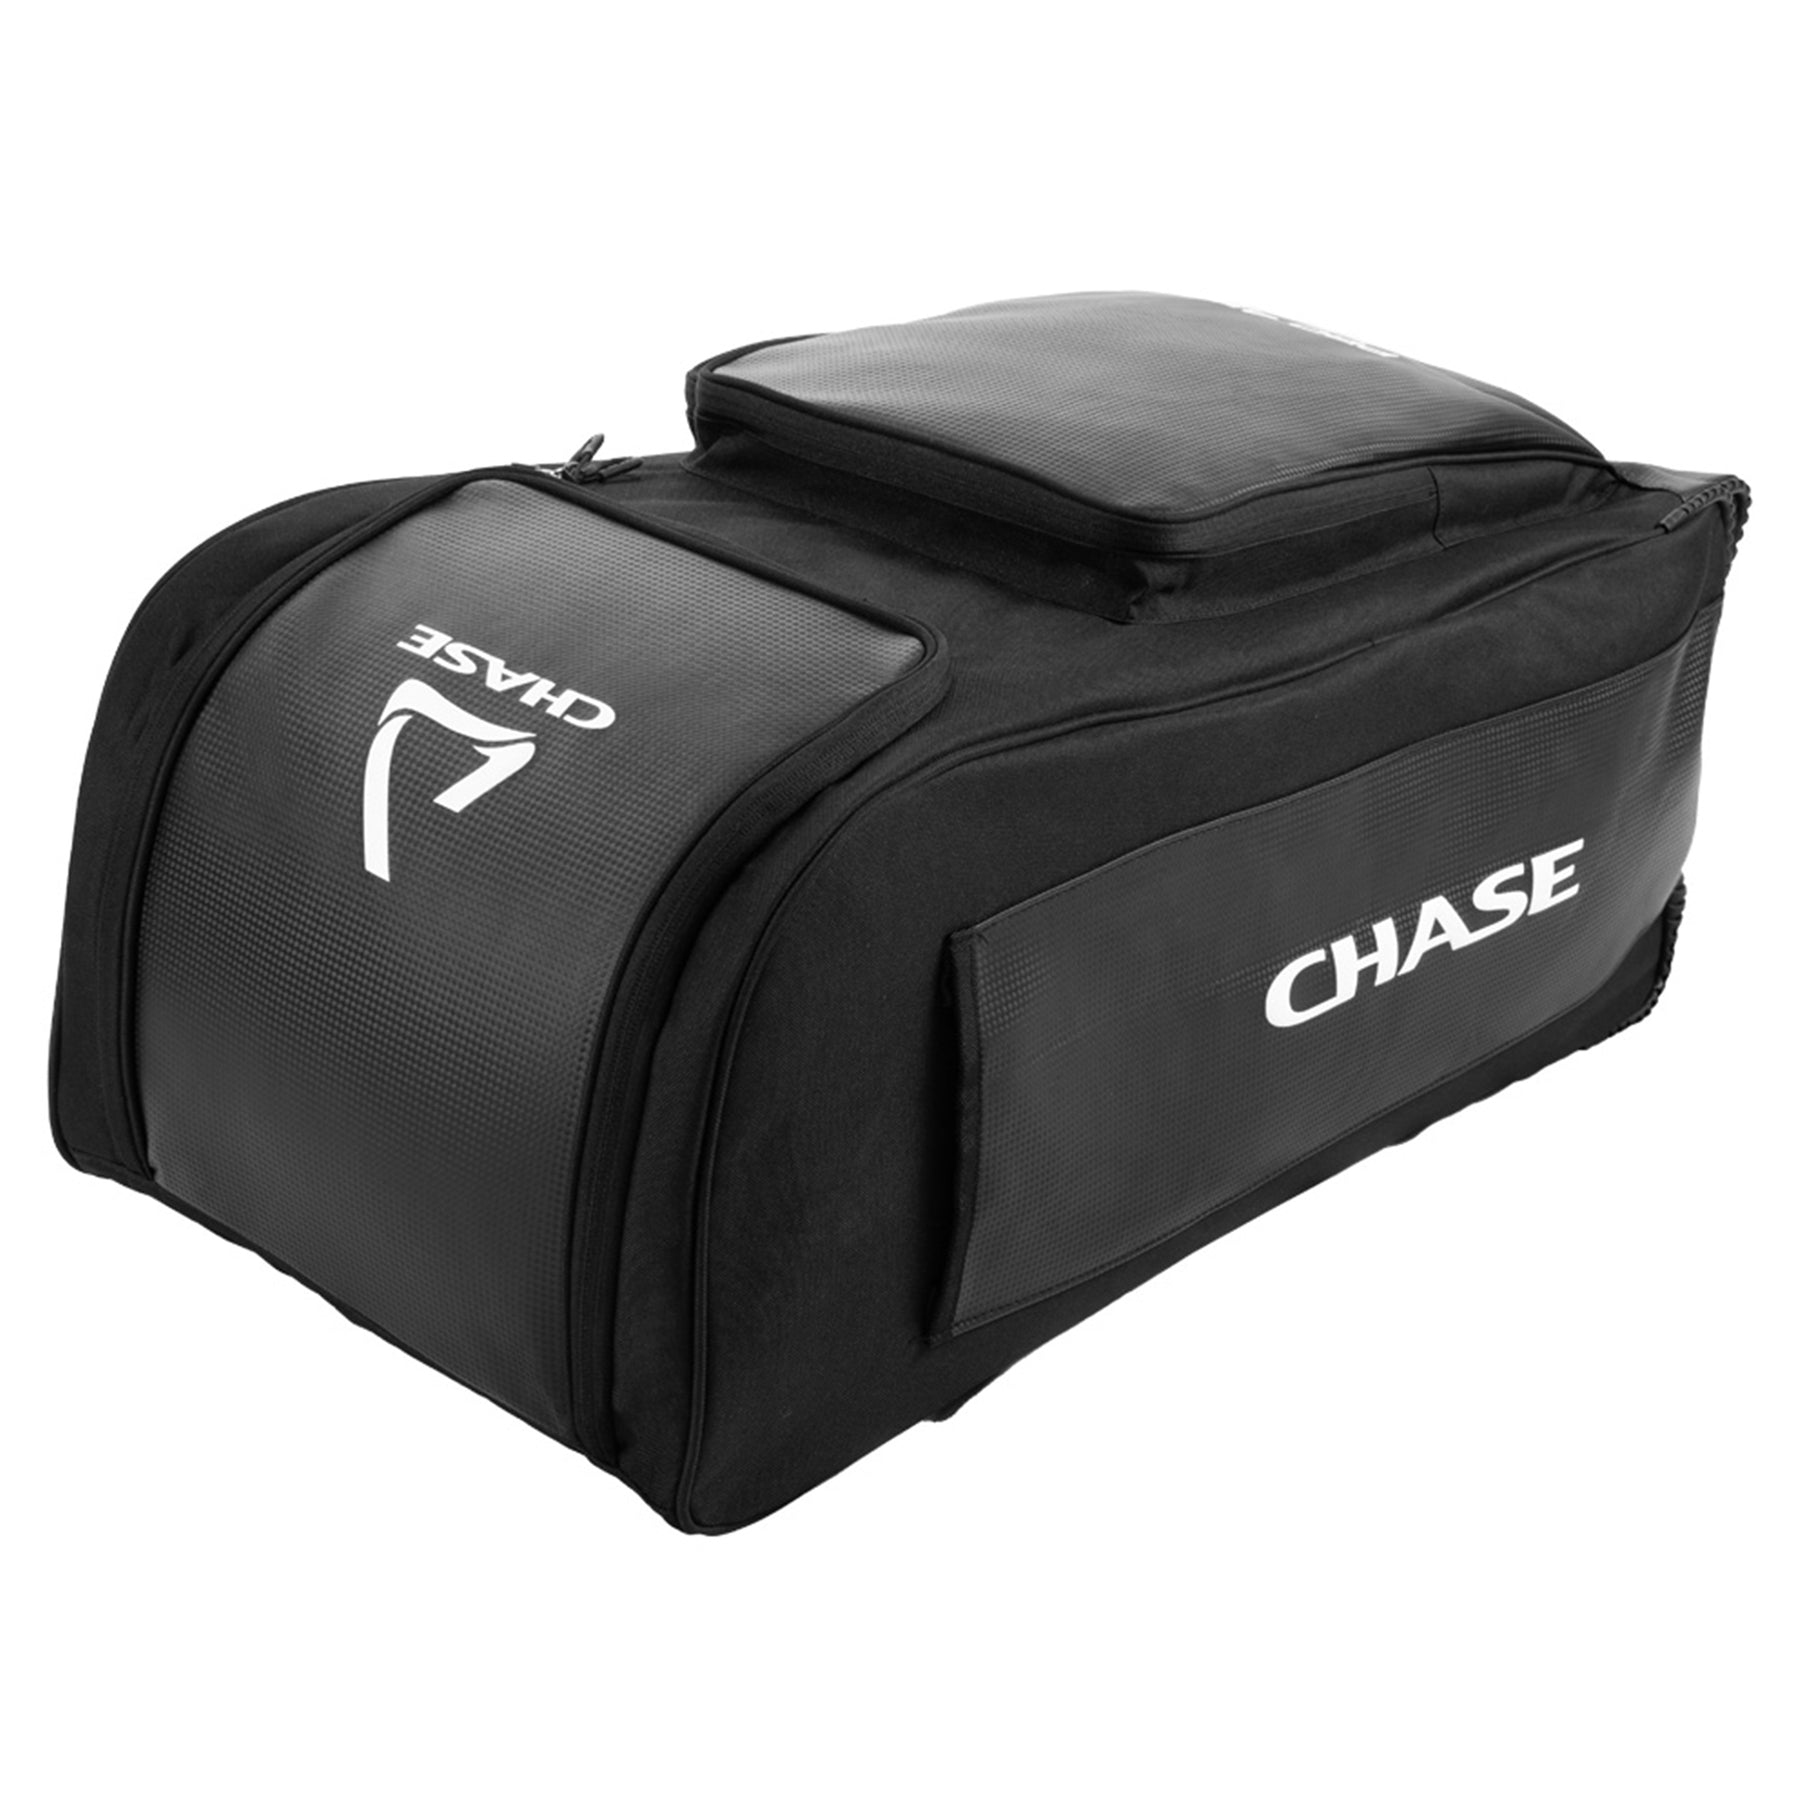 Chase Pro Duffle 45 Cricket Bag